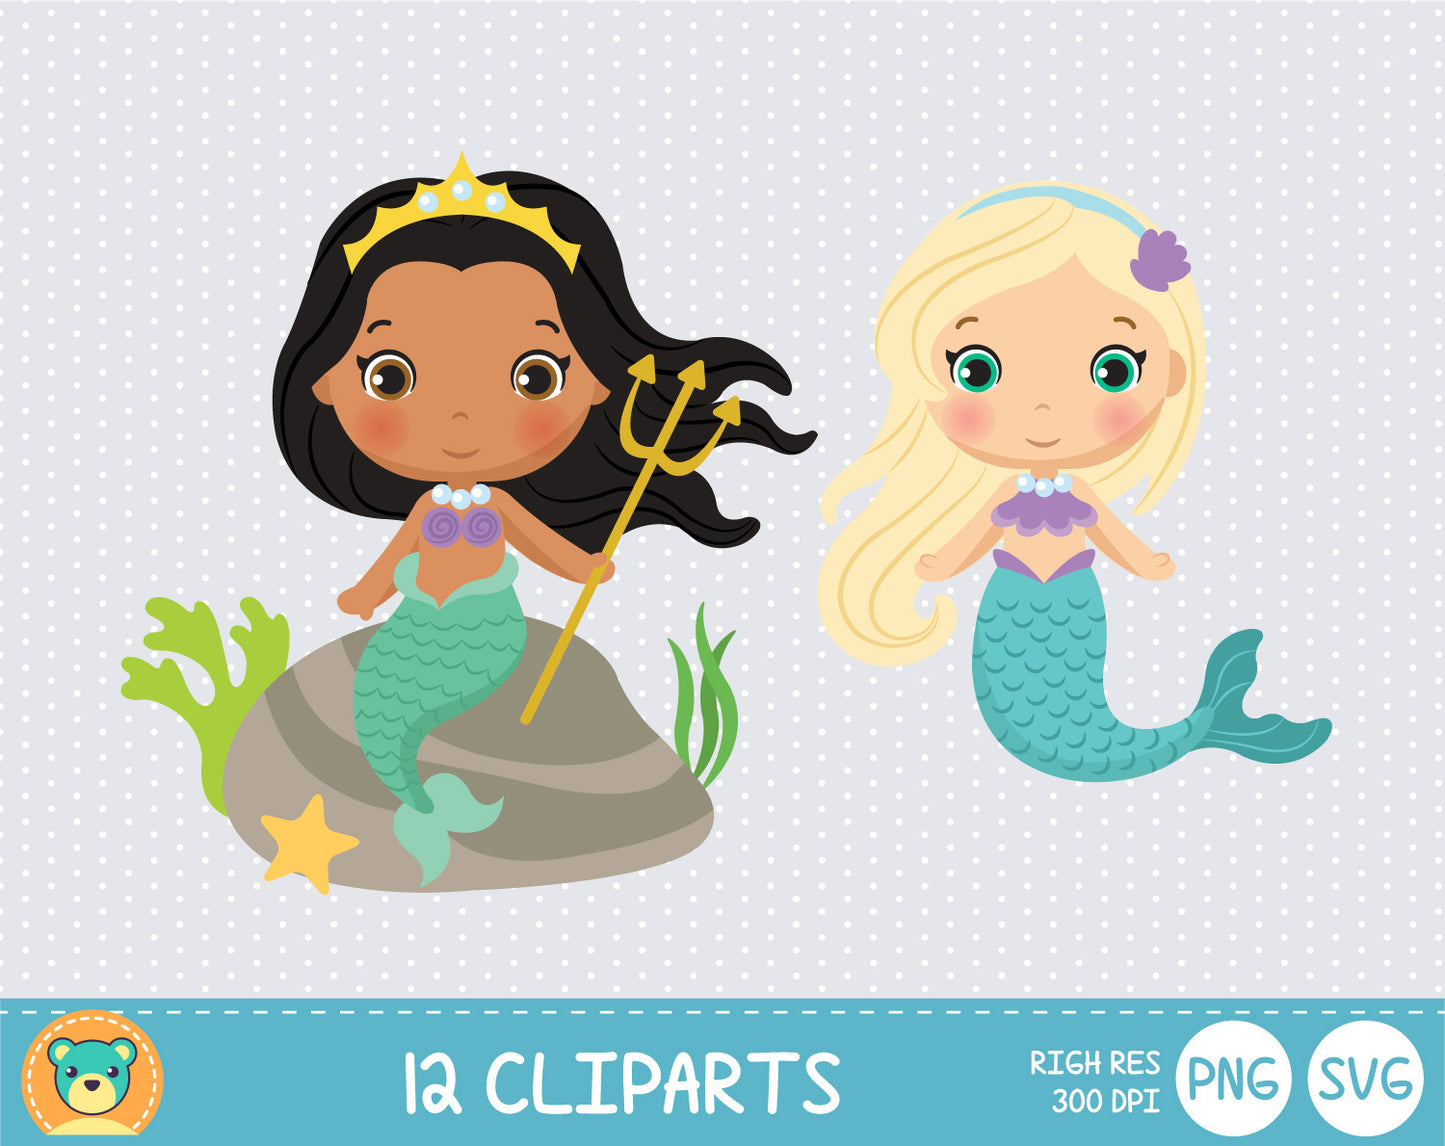 Cute Mermaids clipart set, Digital clip art for decoration, scrapbooking, PNG, SVG, instant download